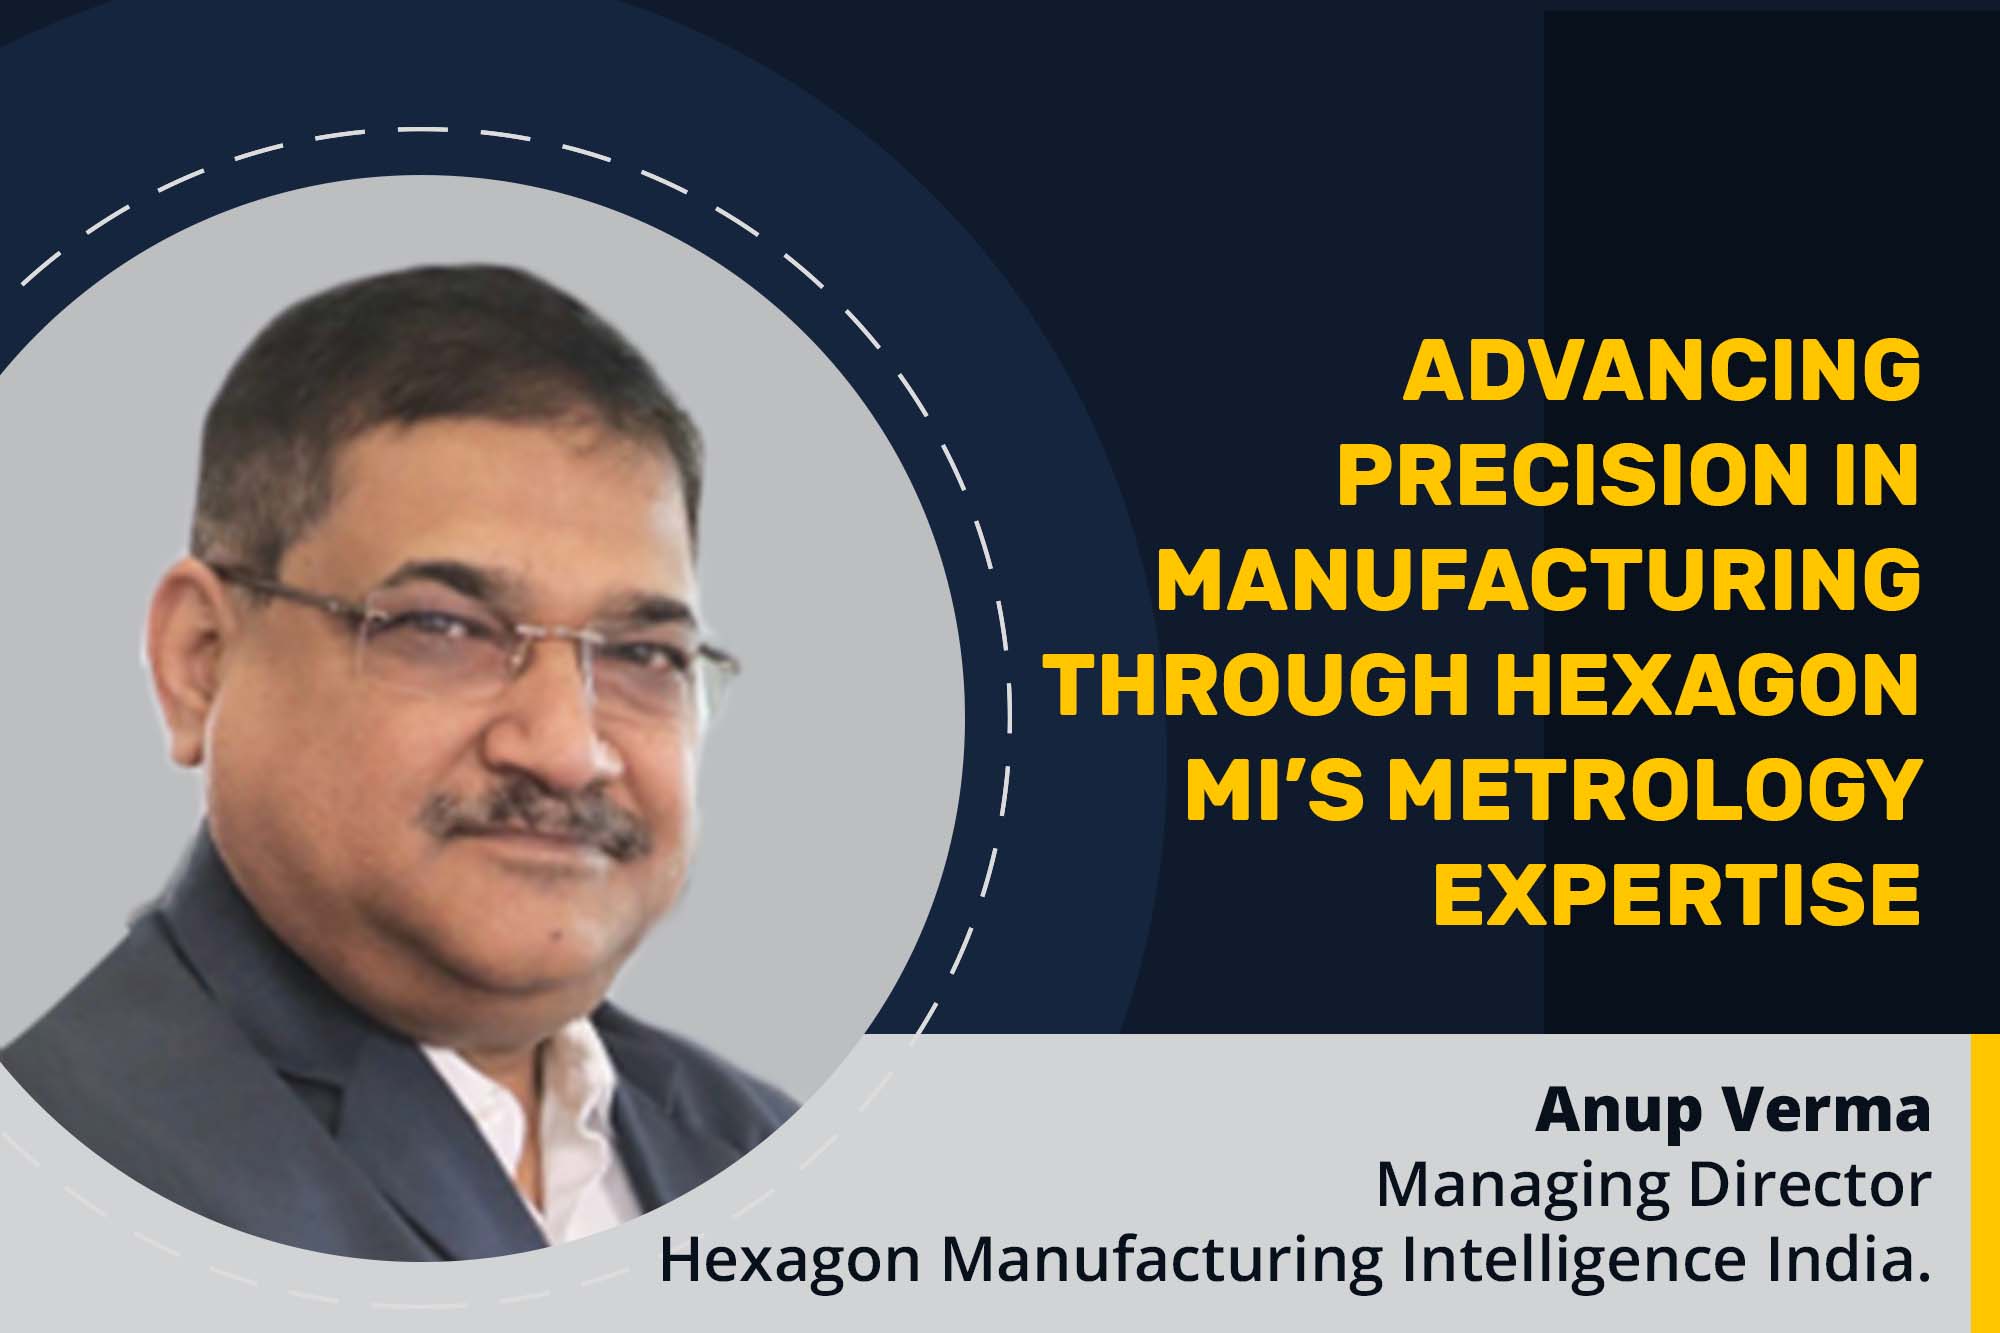 Advancing precision in manufacturing through Hexagon MI’s metrology expertise